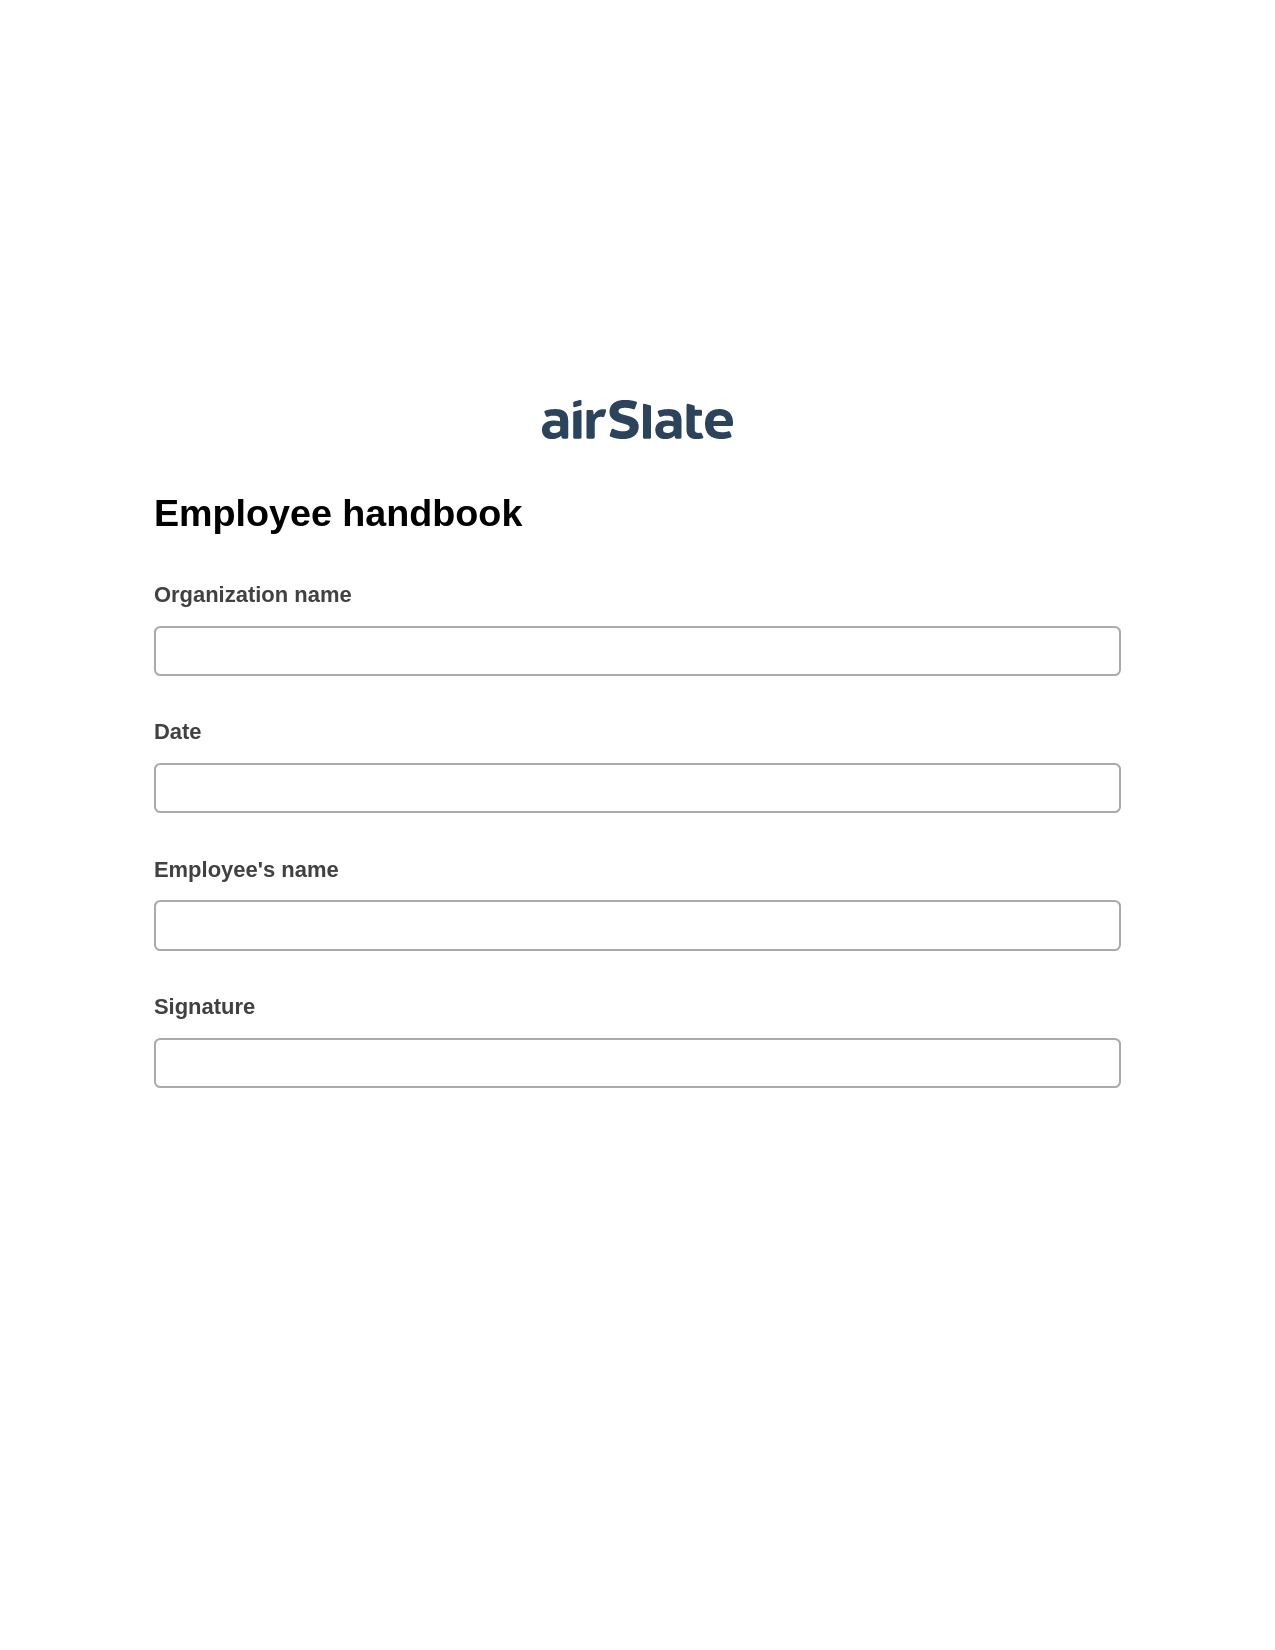 Multirole Employee handbook Pre-fill from Excel Spreadsheet Bot, Send Mailchimp Campaign Bot, Export to Smartsheet